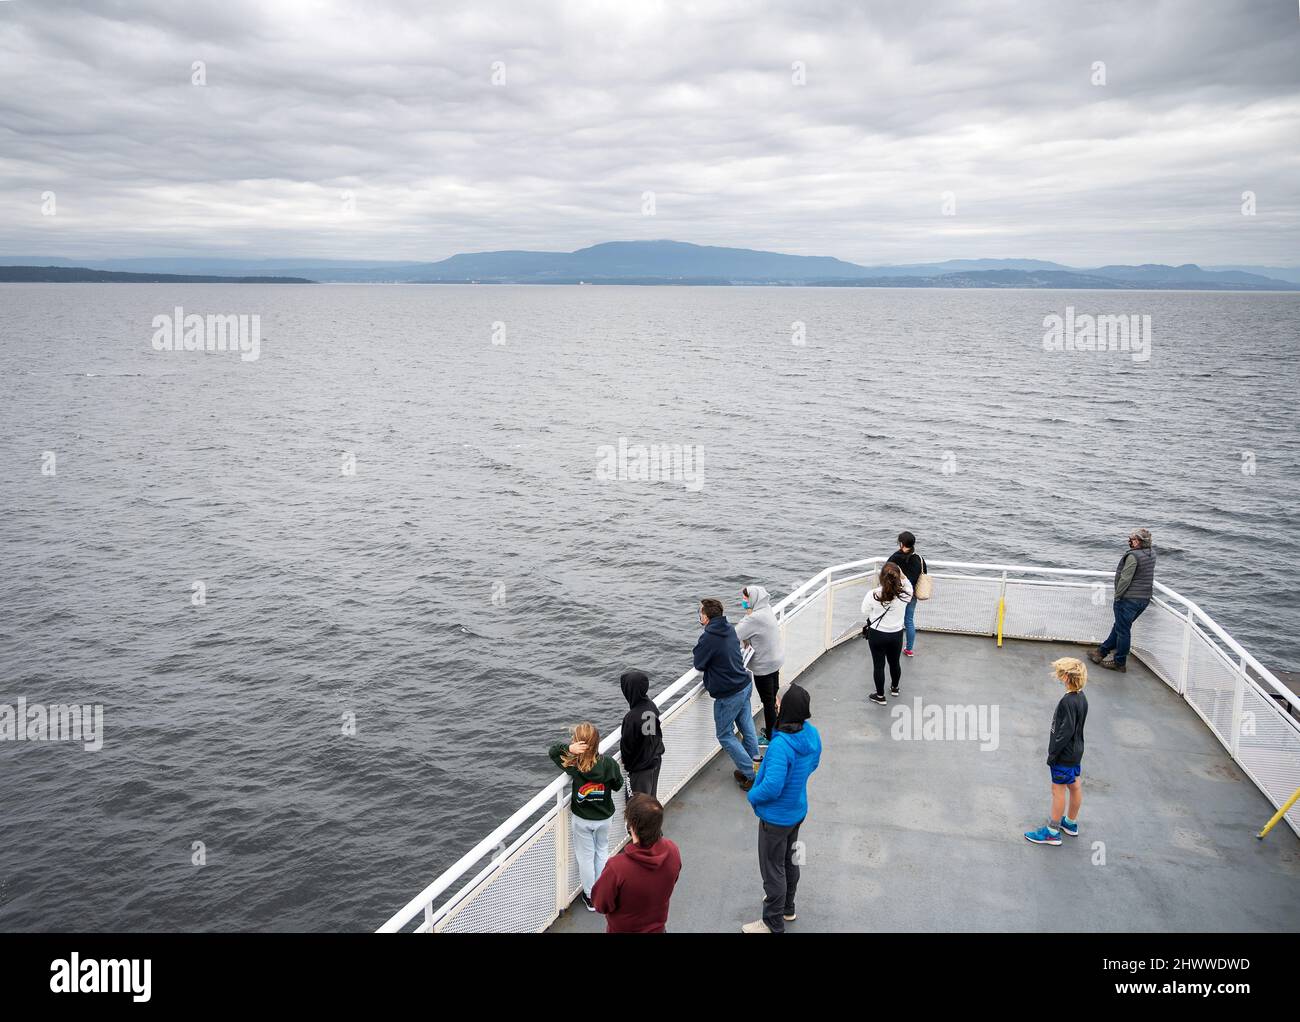 The Horseshoe Bay to Nanaimo BC ferry sailing across the Georgia Strait., Vancouver Island BC, Canada. Stock Photo